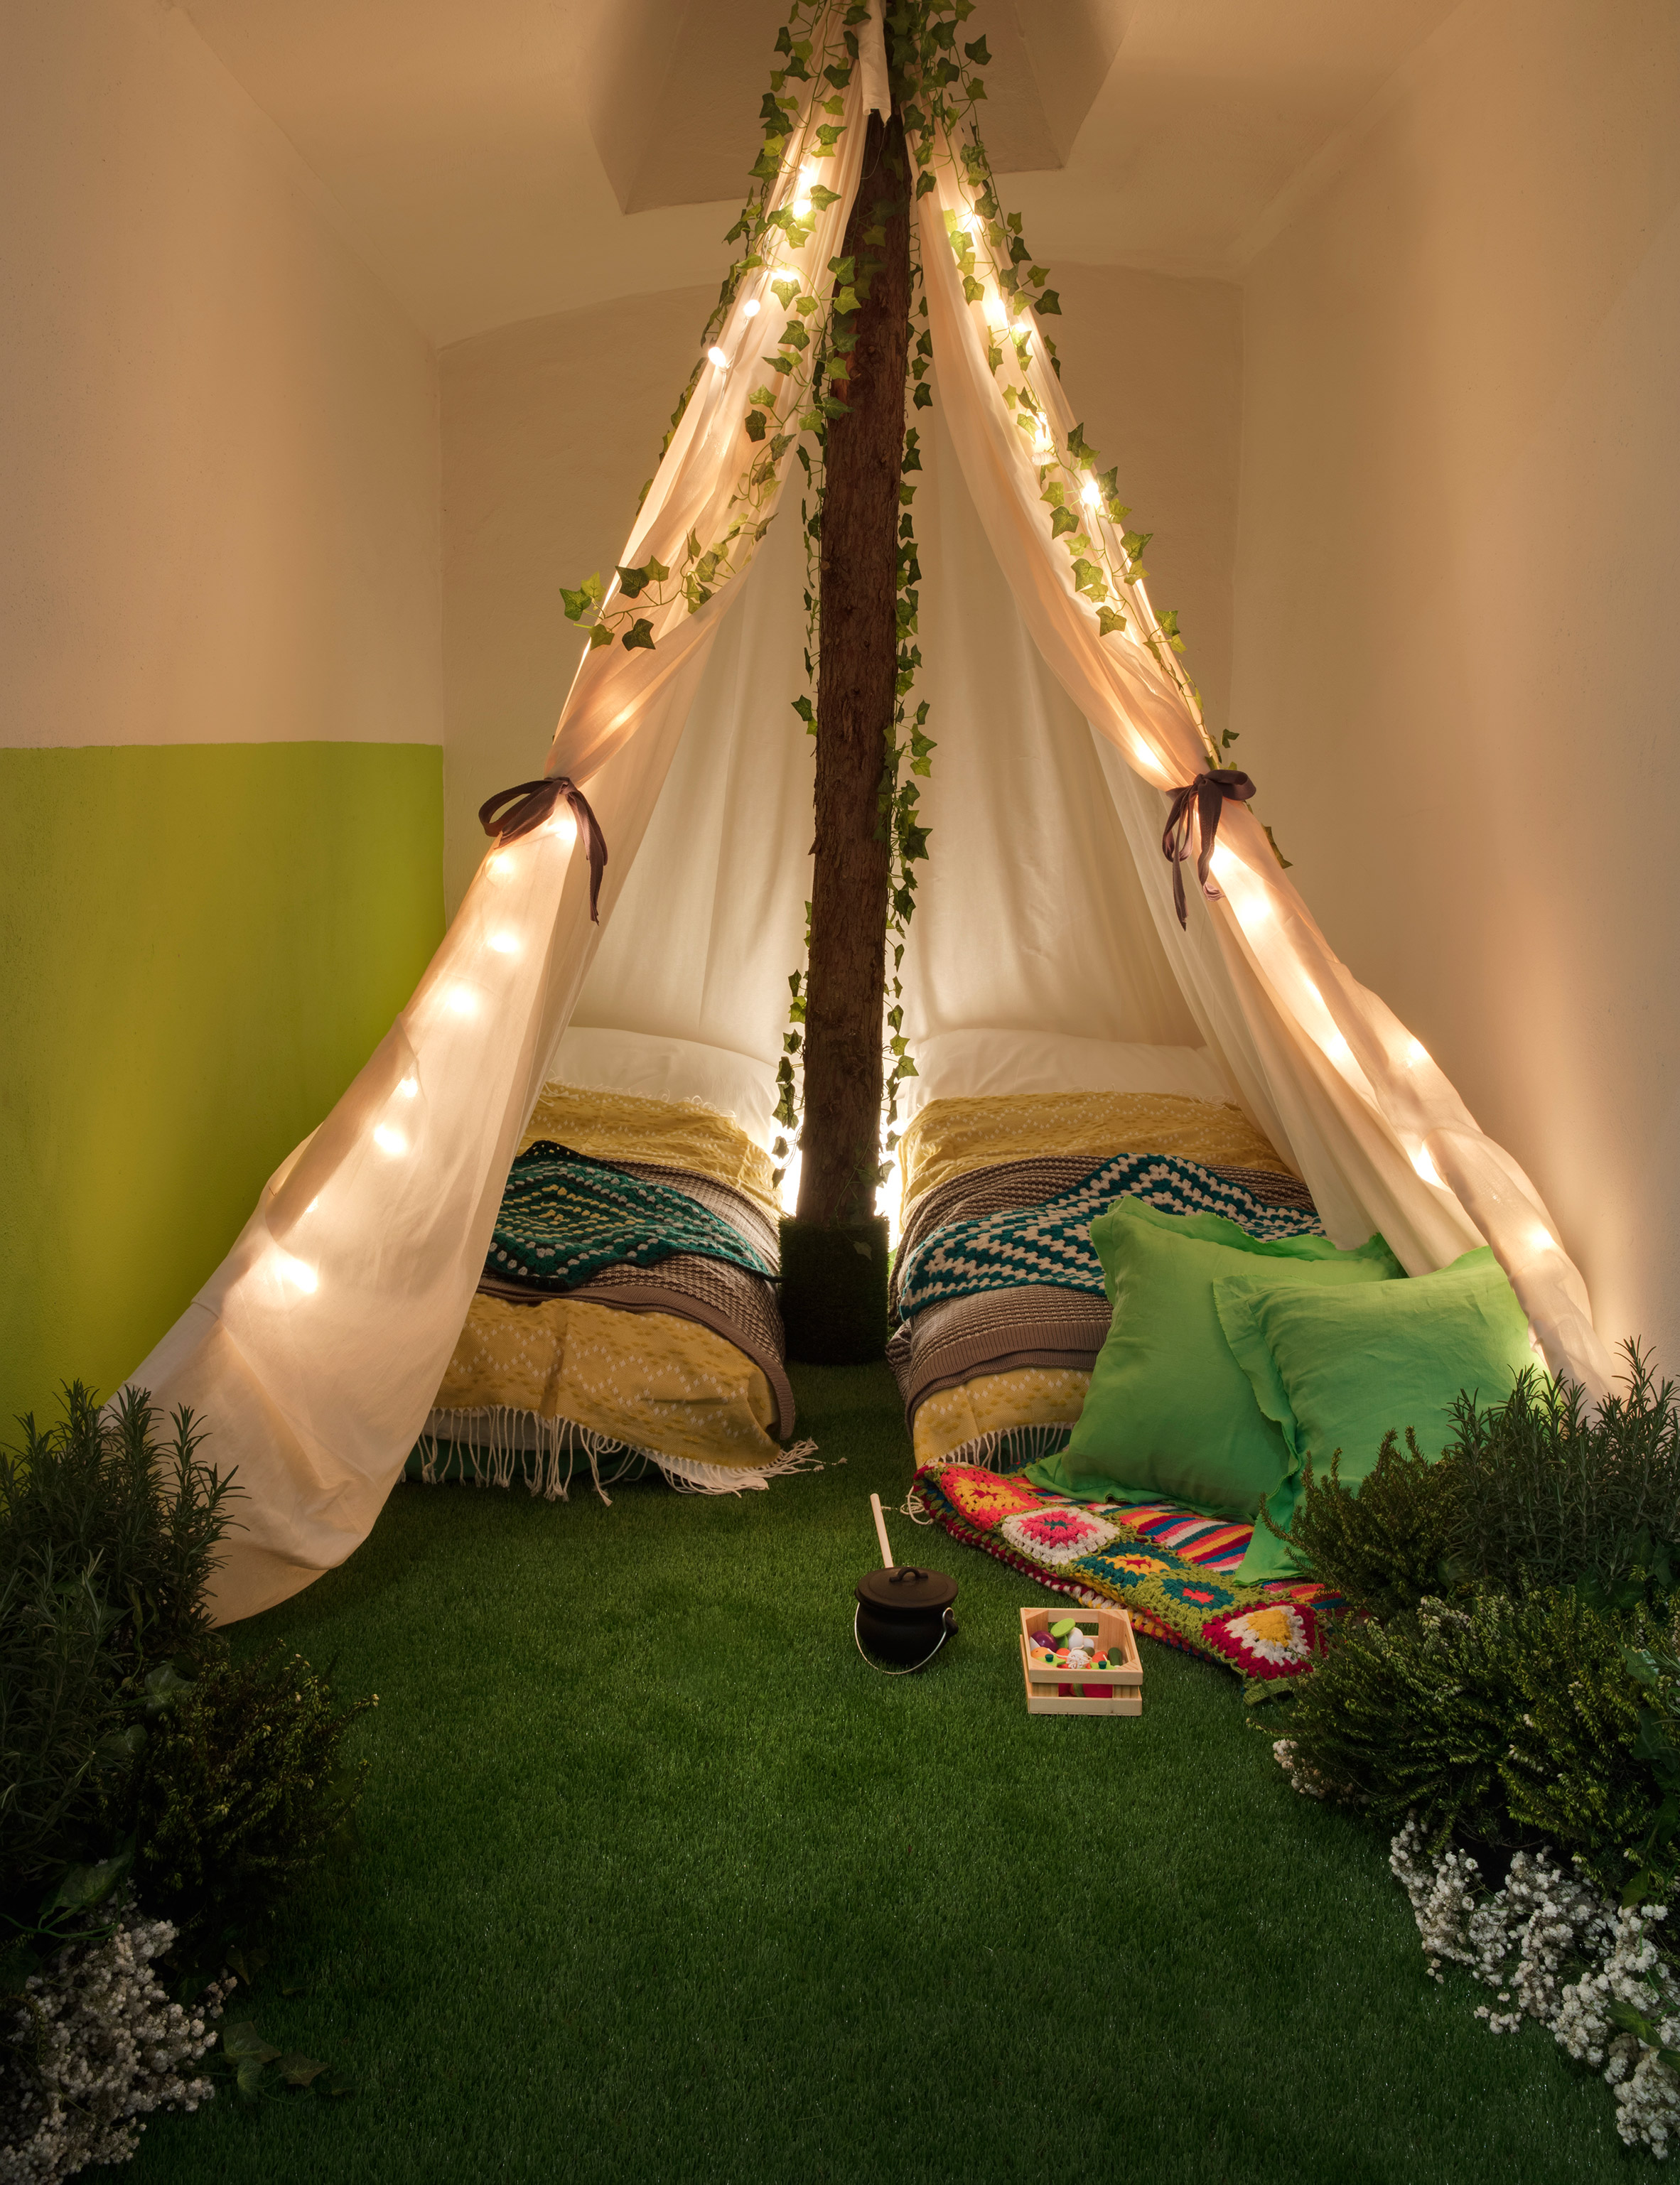 greenery-apartment-installation-airbnb-pantone-design_dezeen_2364_col_9.jpg